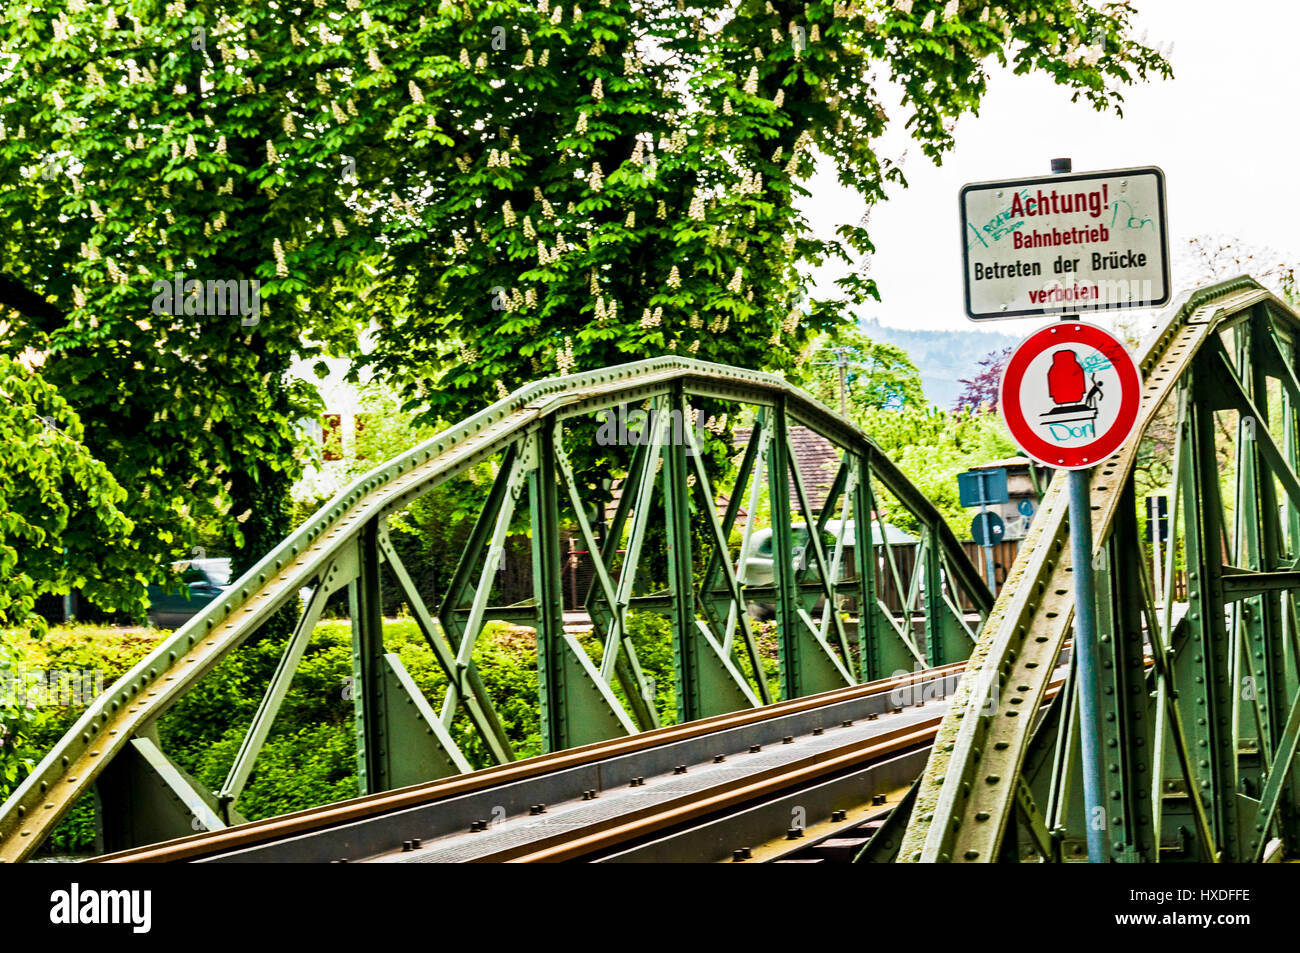 Warning at a railway bridge Stock Photo